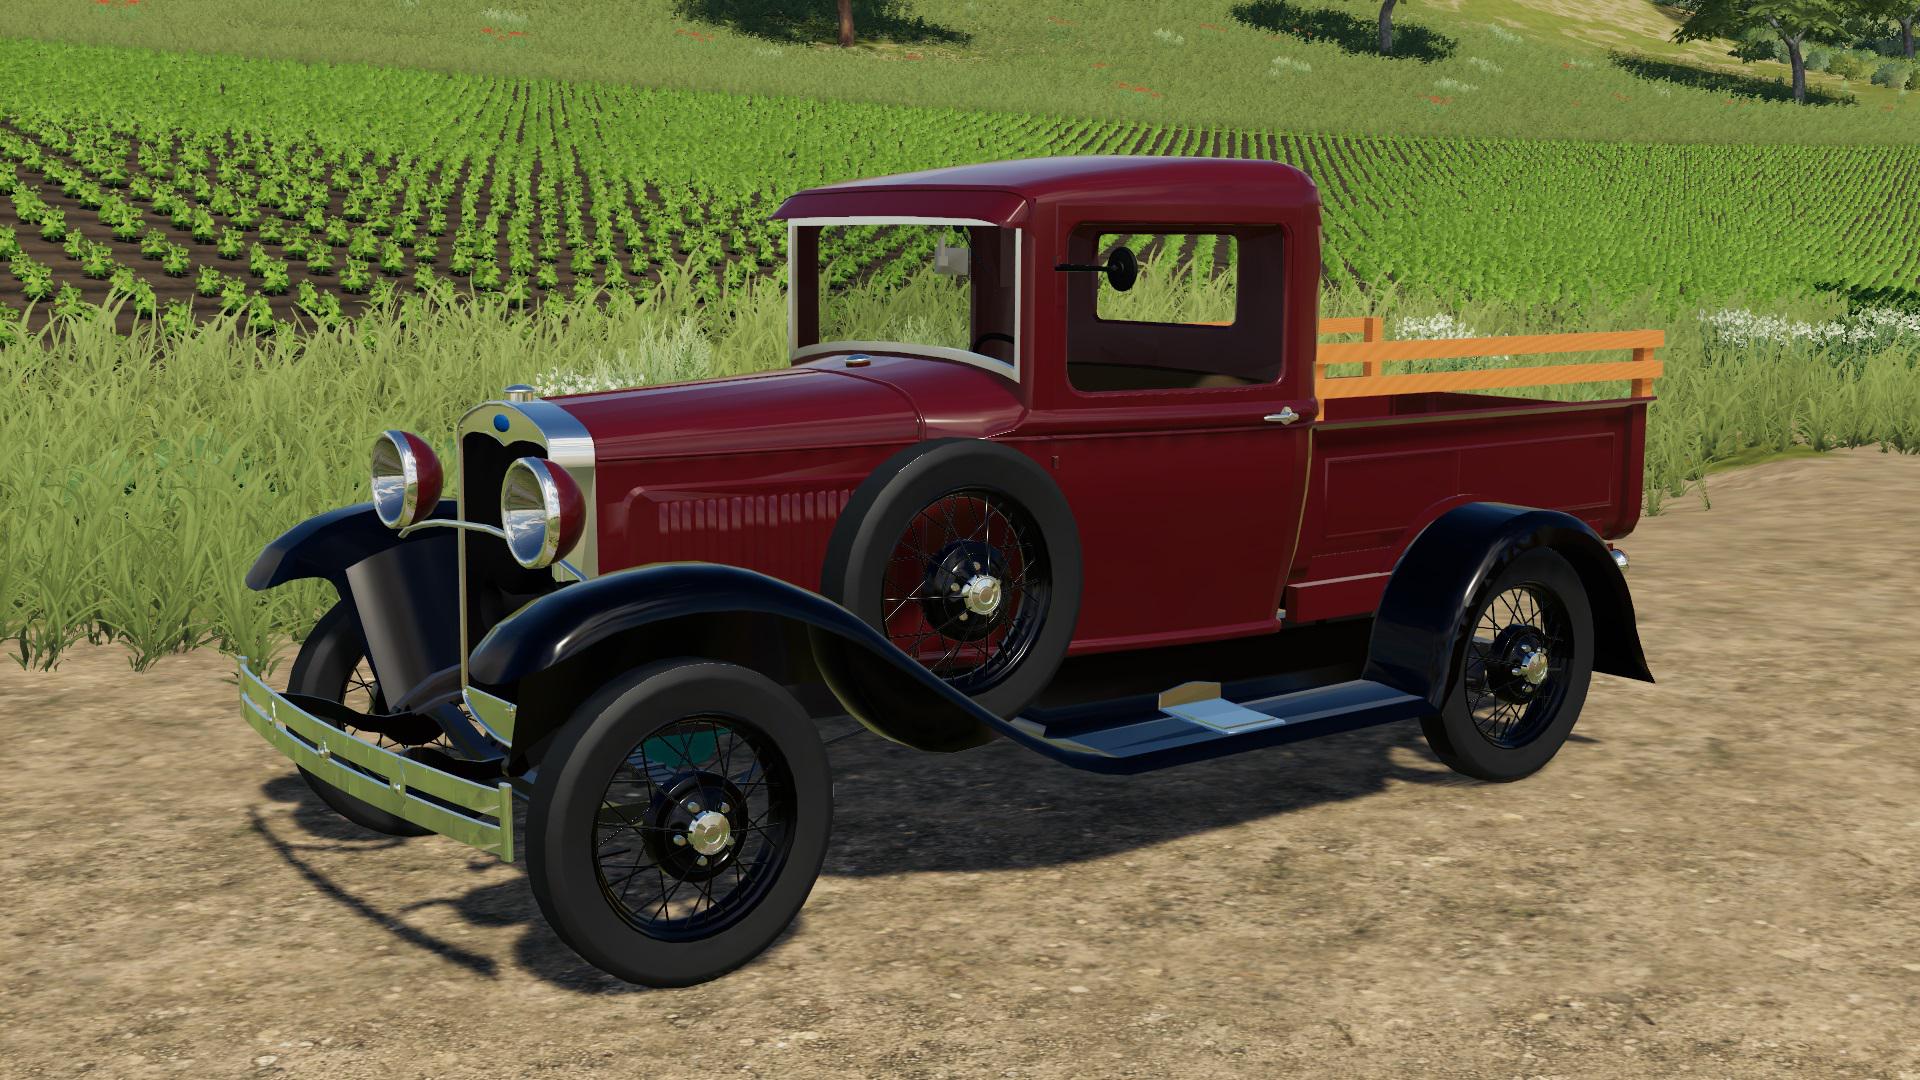 Ford Modell A Pickup 1930 V10 Fs19 Landwirtschafts Simulator 19 Mods